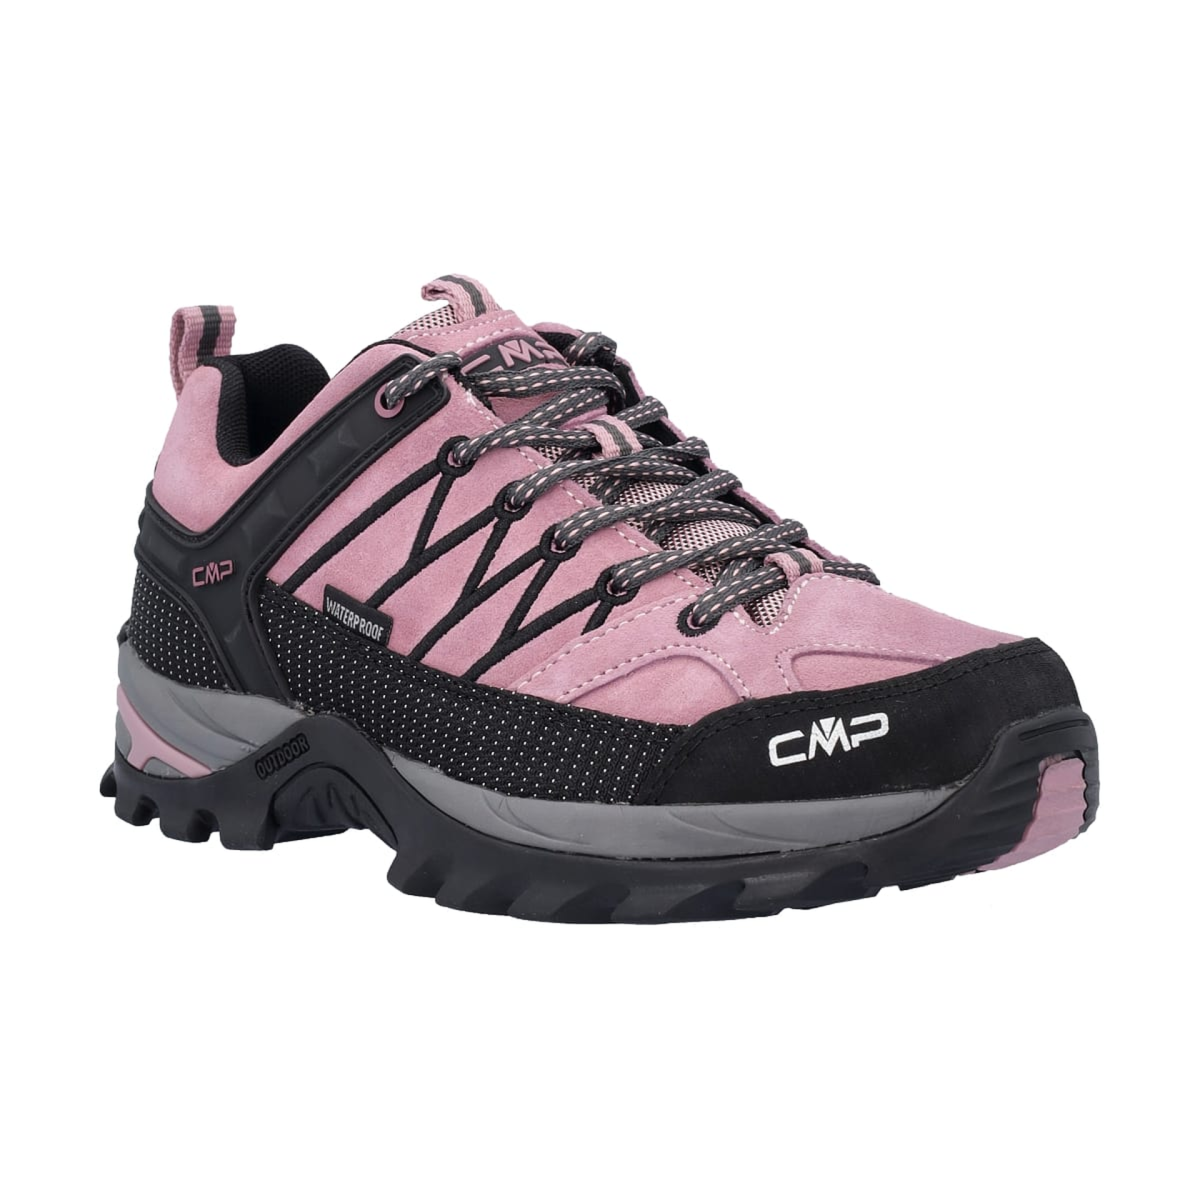 CMP Damen Rigel Low Women Trekking Schuhe WP 3Q13246 fard-piombo, 89,95 €